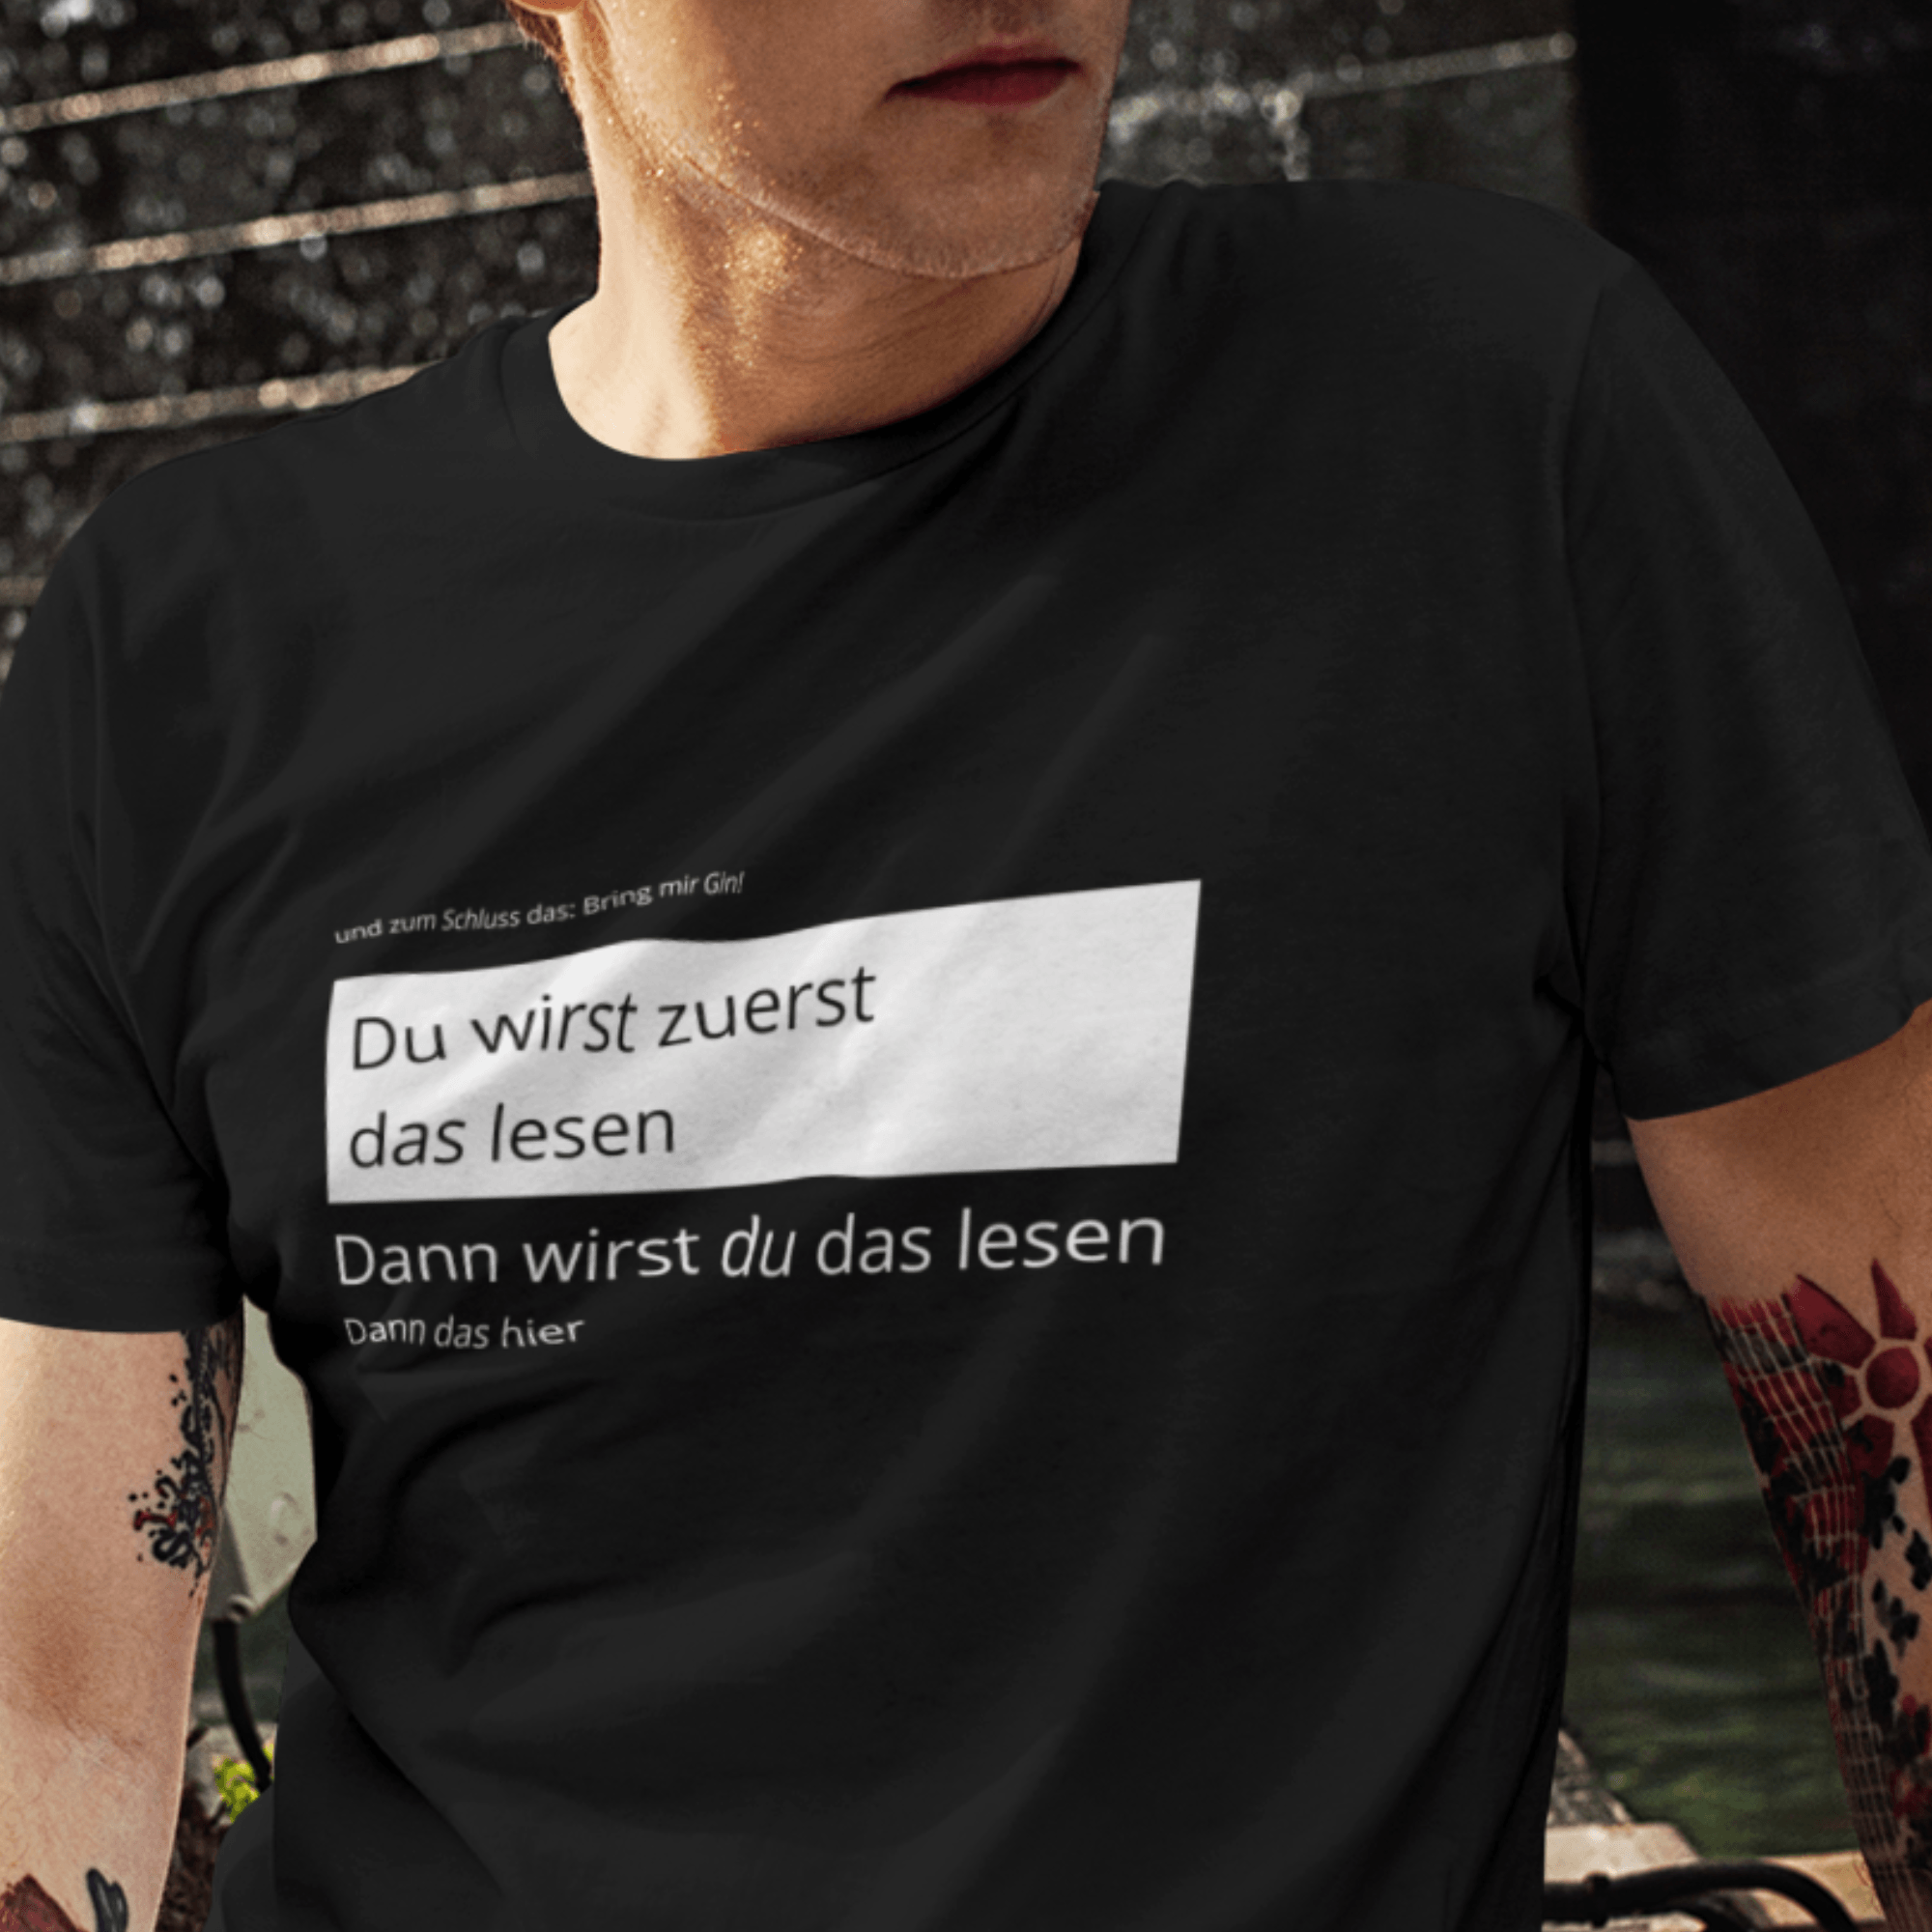 BRING MIR GIN - Herren Shirt - einschenken24.de